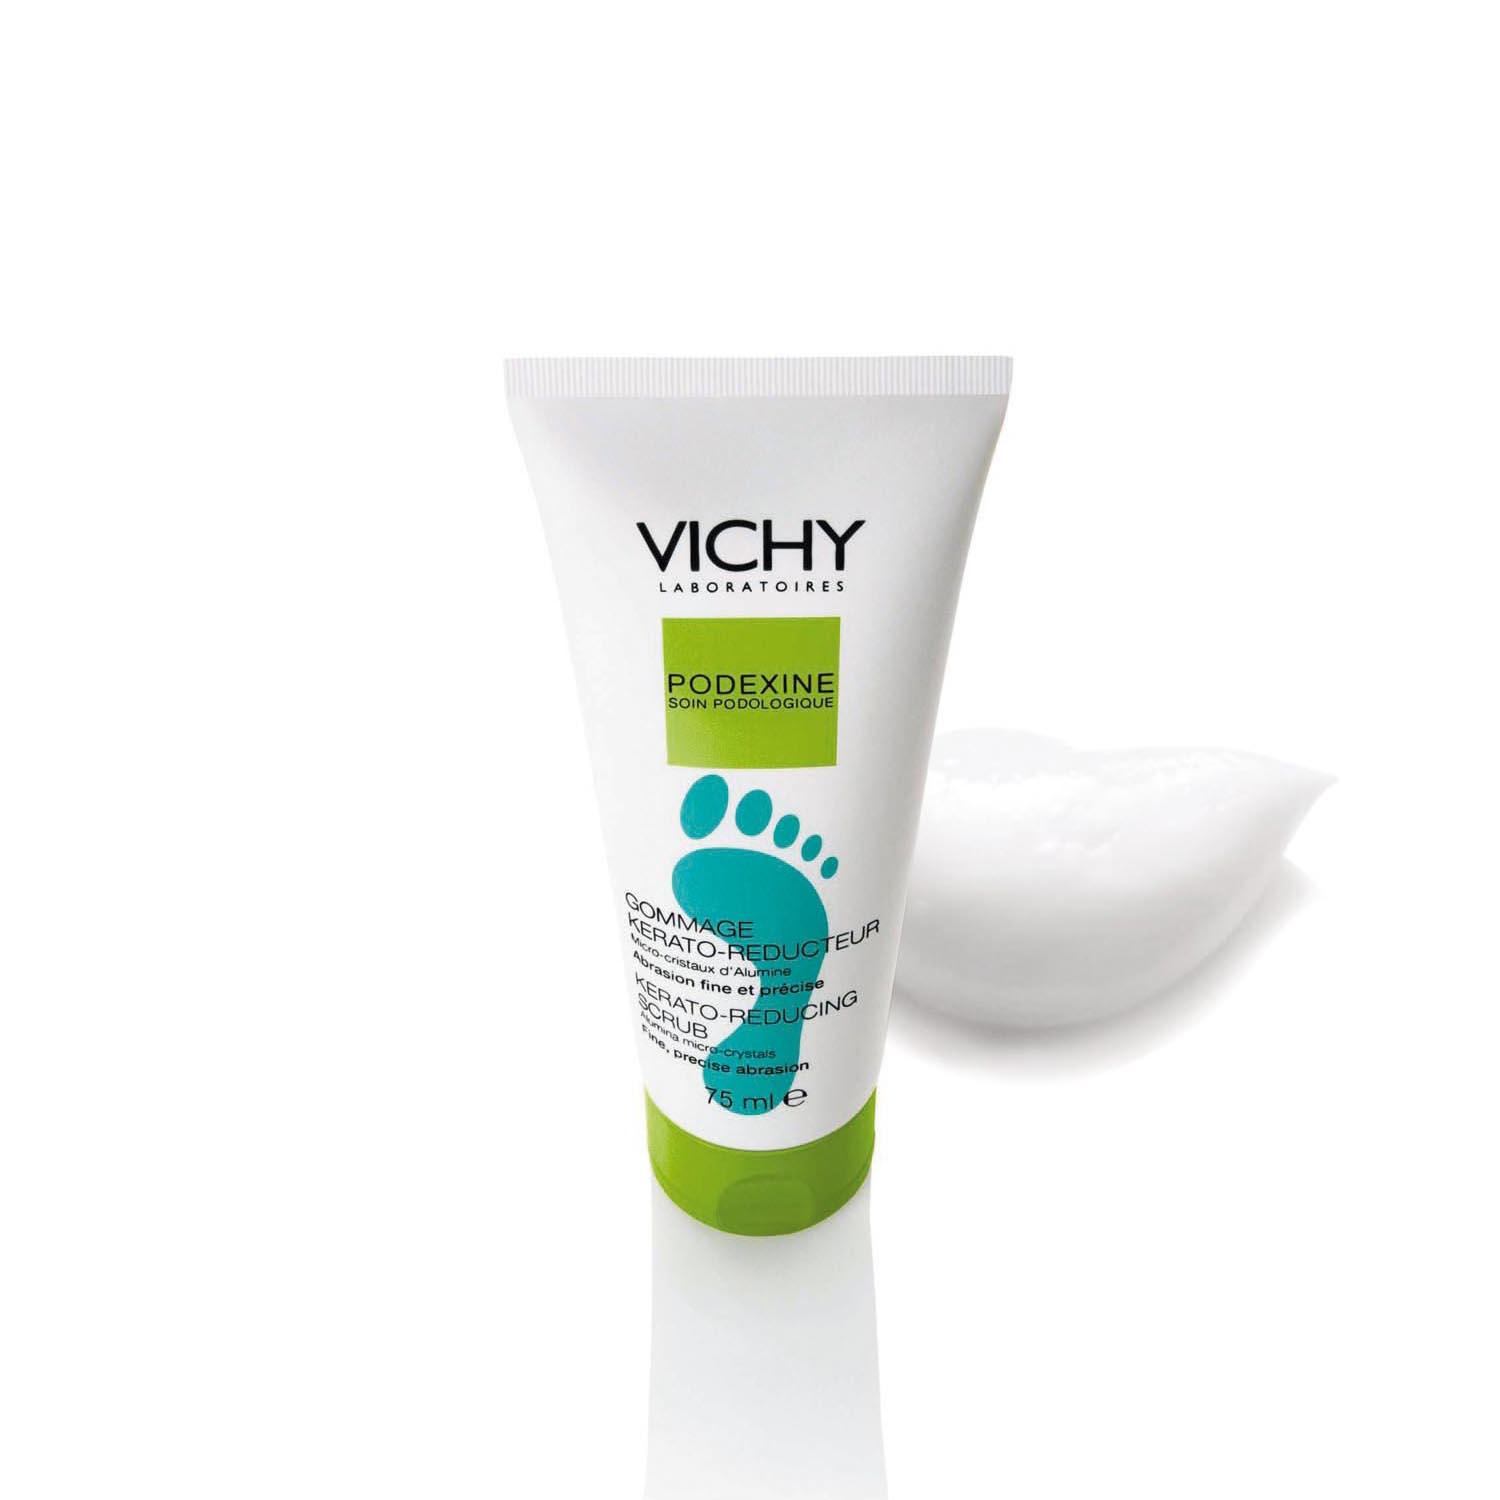 Vichy voetscrub - €12.jpg NL